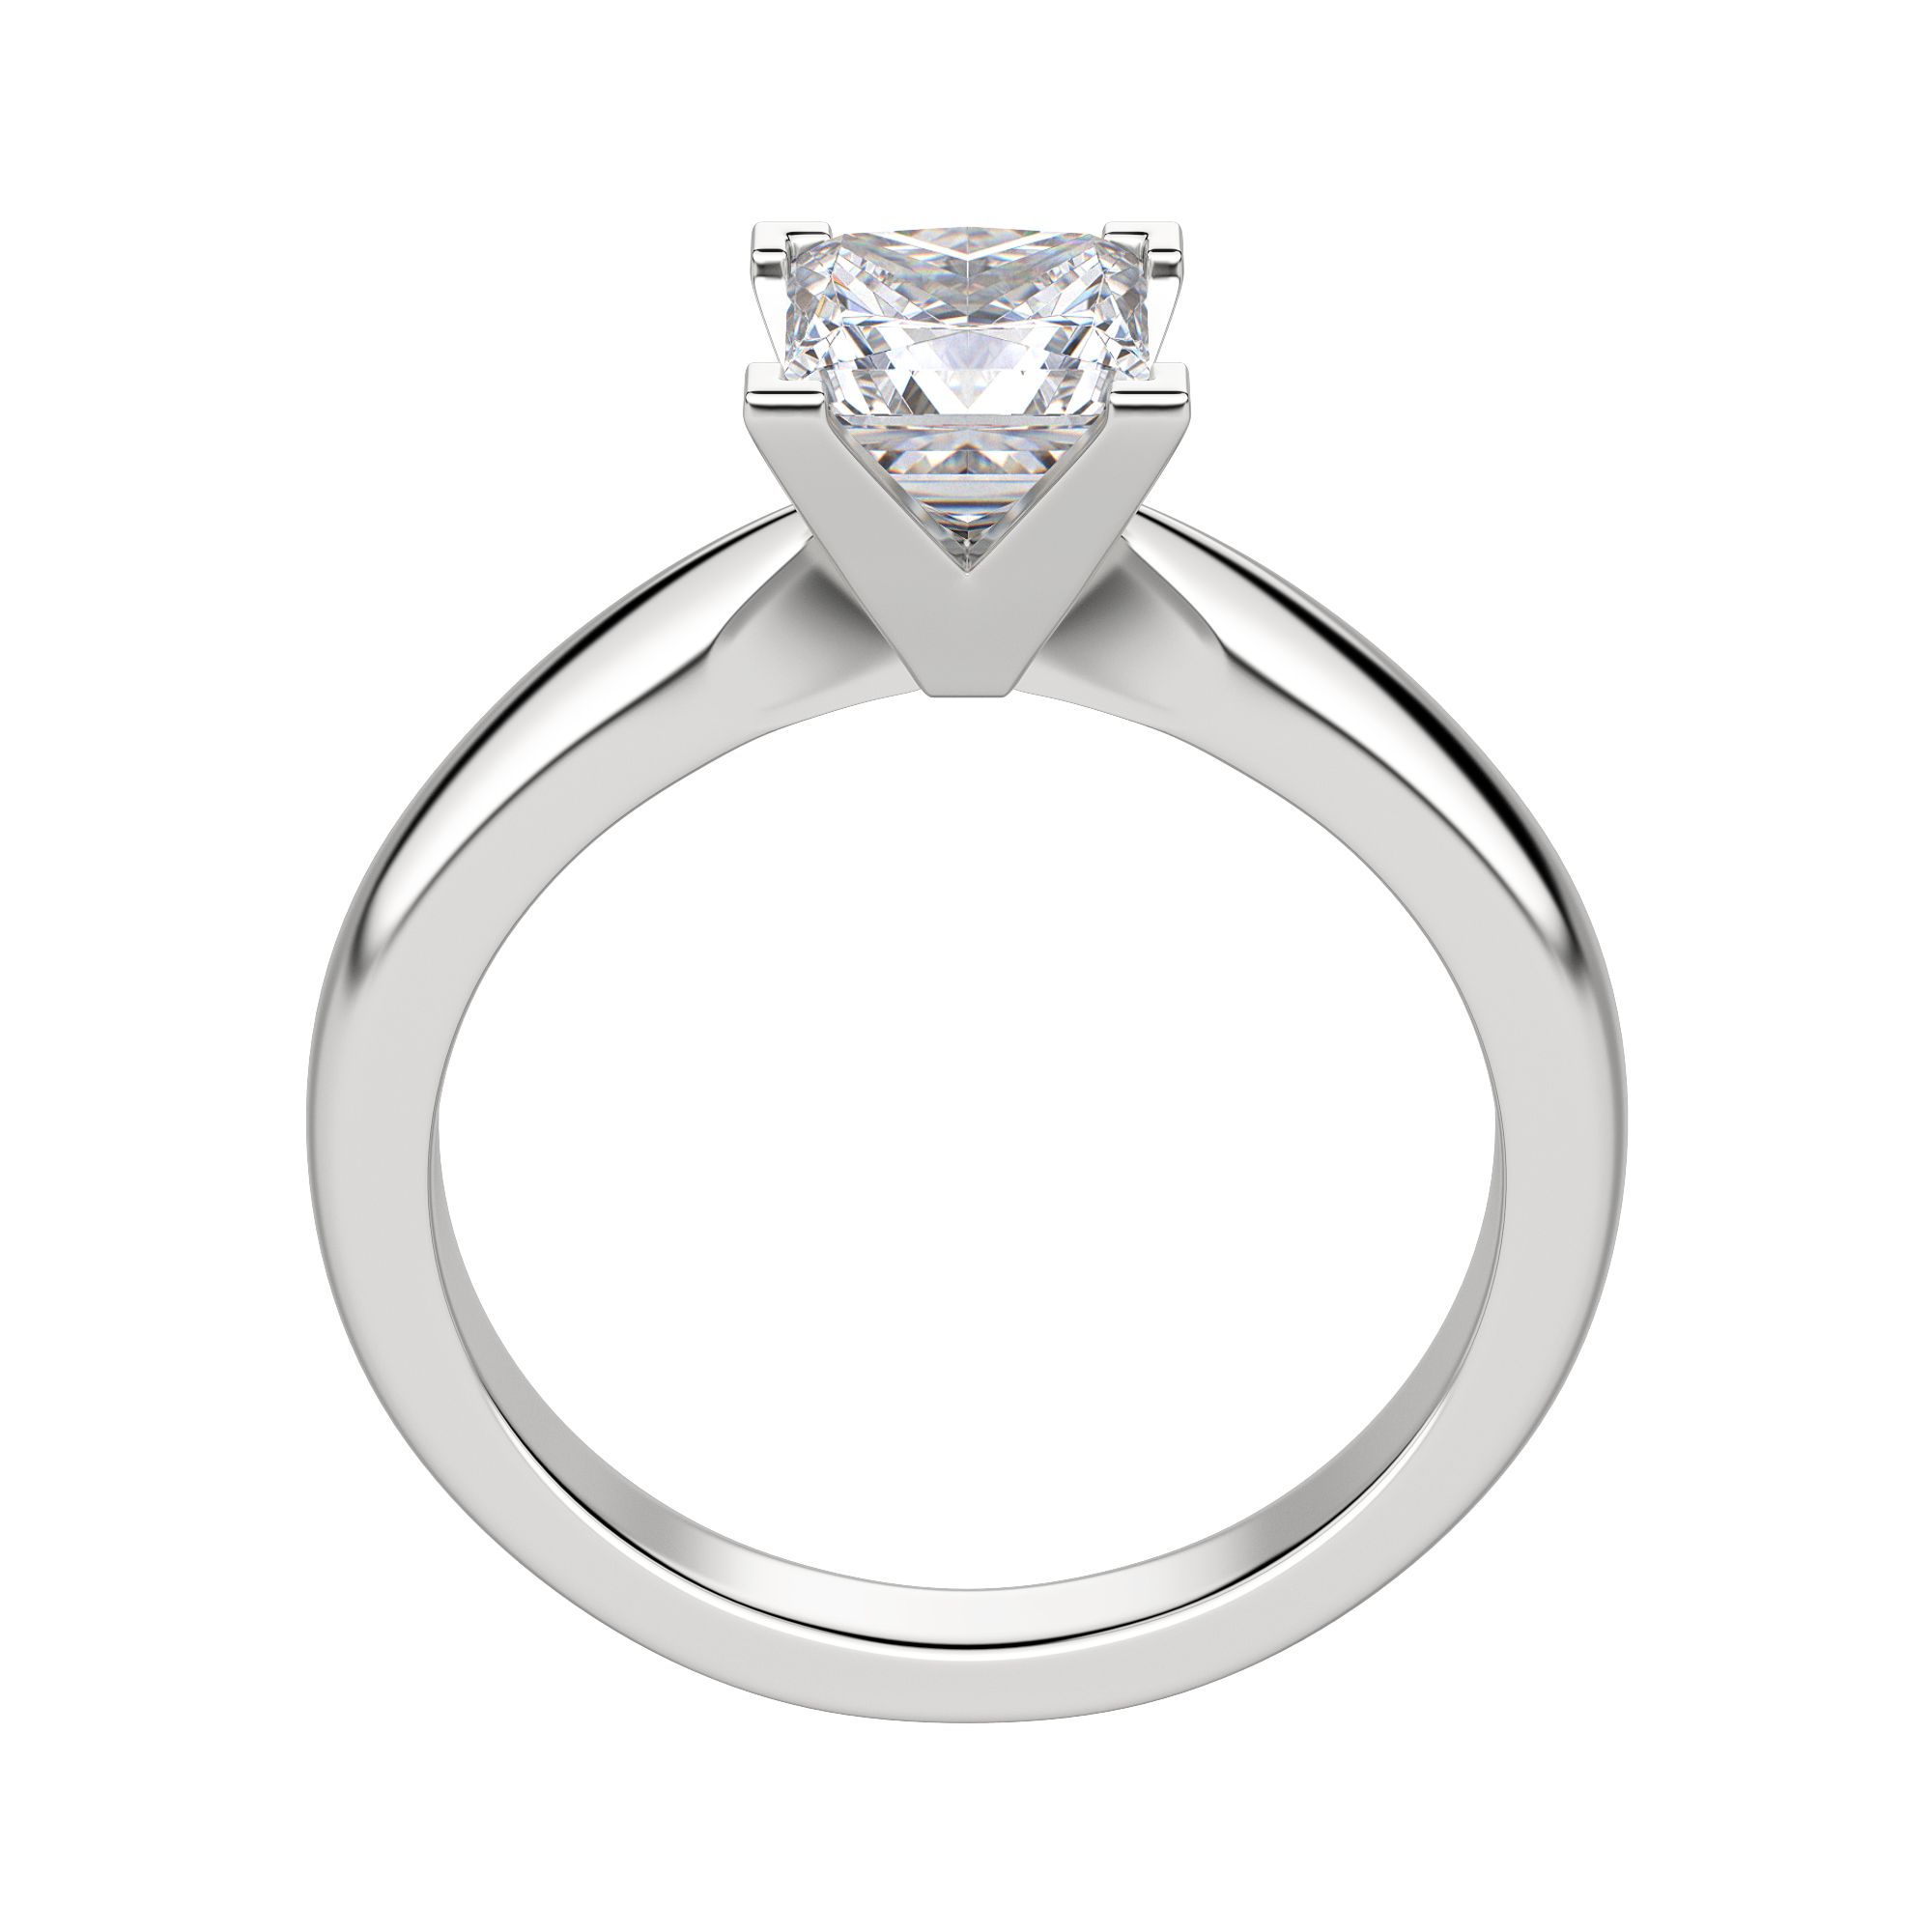 Isle Princess Cut Engagement Ring, Hover, Platinum, 18K White Gold, 